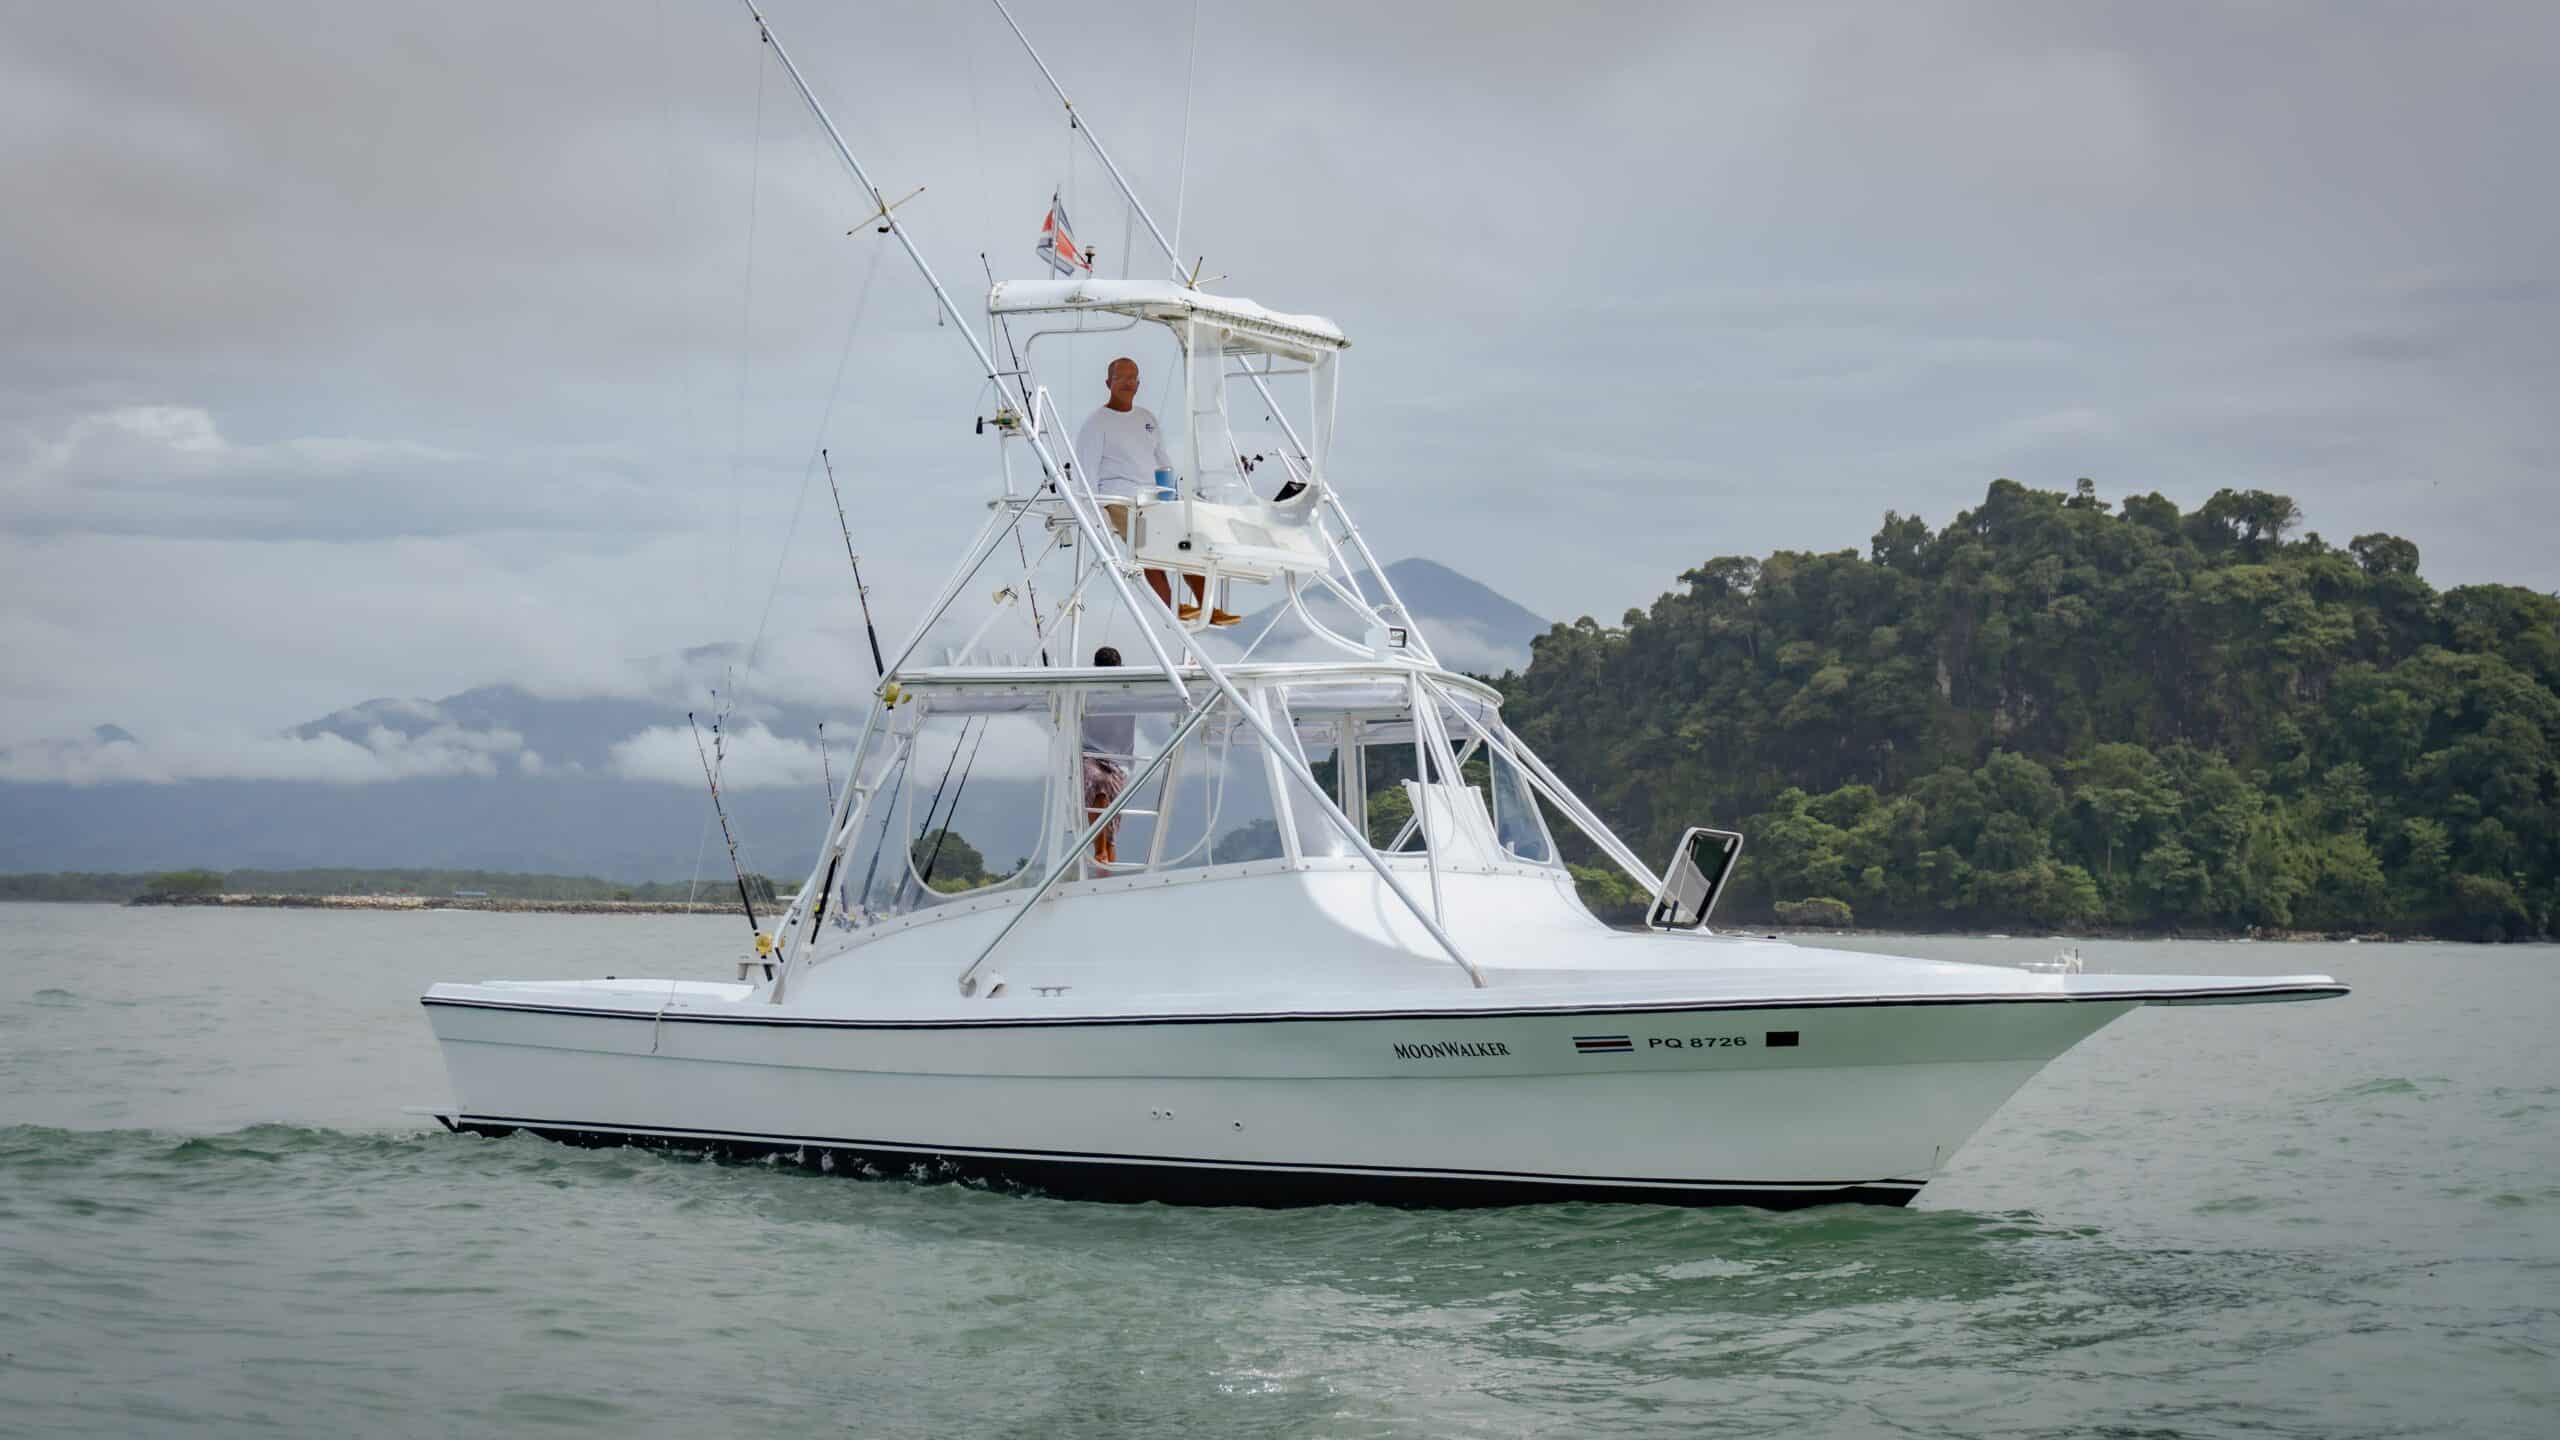 https://www.crfishingcharters.com/wp-content/uploads/2022/09/costa-rica-fishing-charters-marina-pez-vela-quepos-sportfihing-33-ft-Dawson-Moonwalker-billfish-marlin-CRFC.jpg